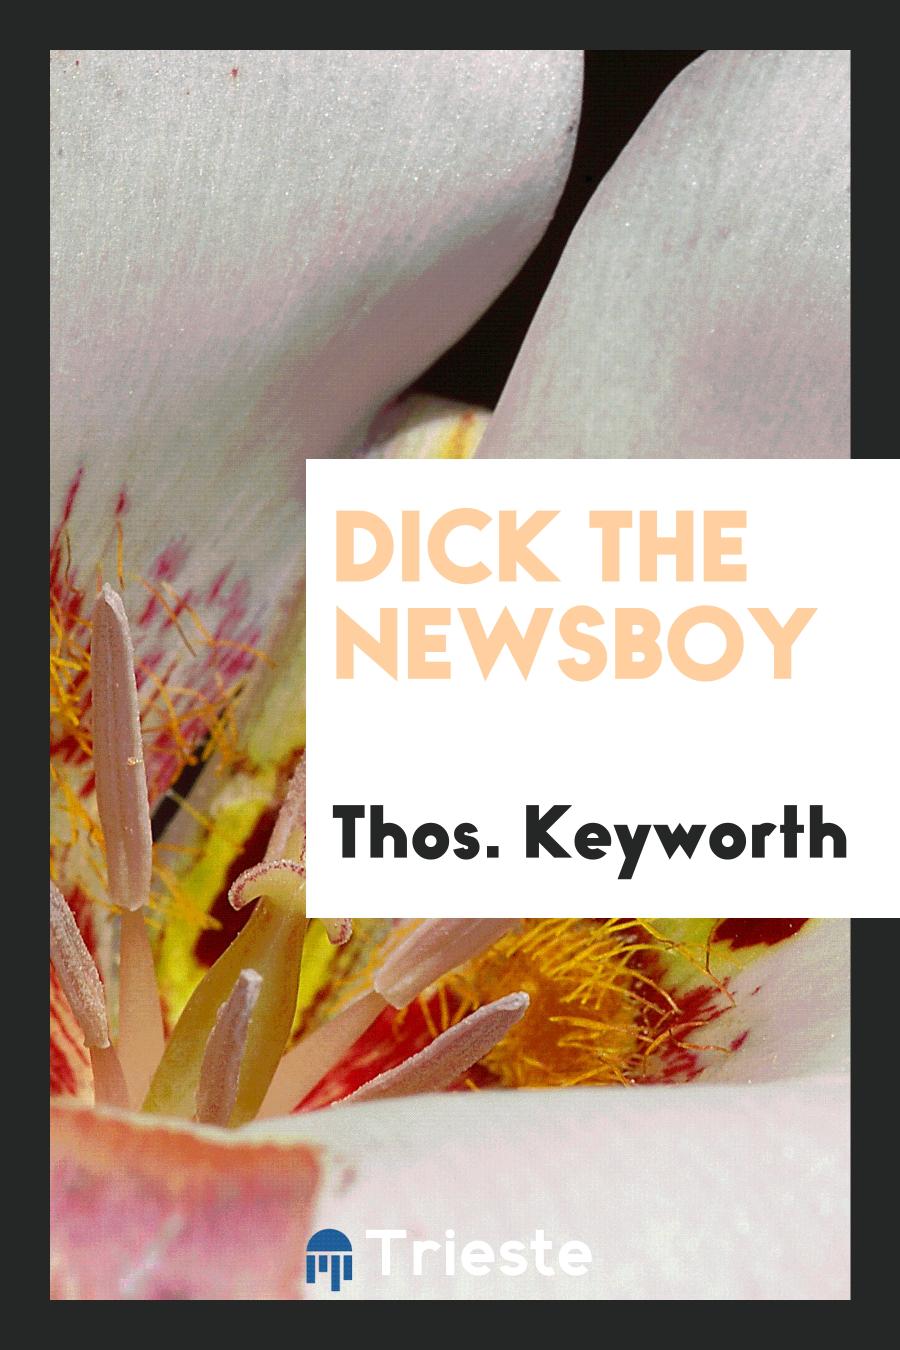 Dick the newsboy